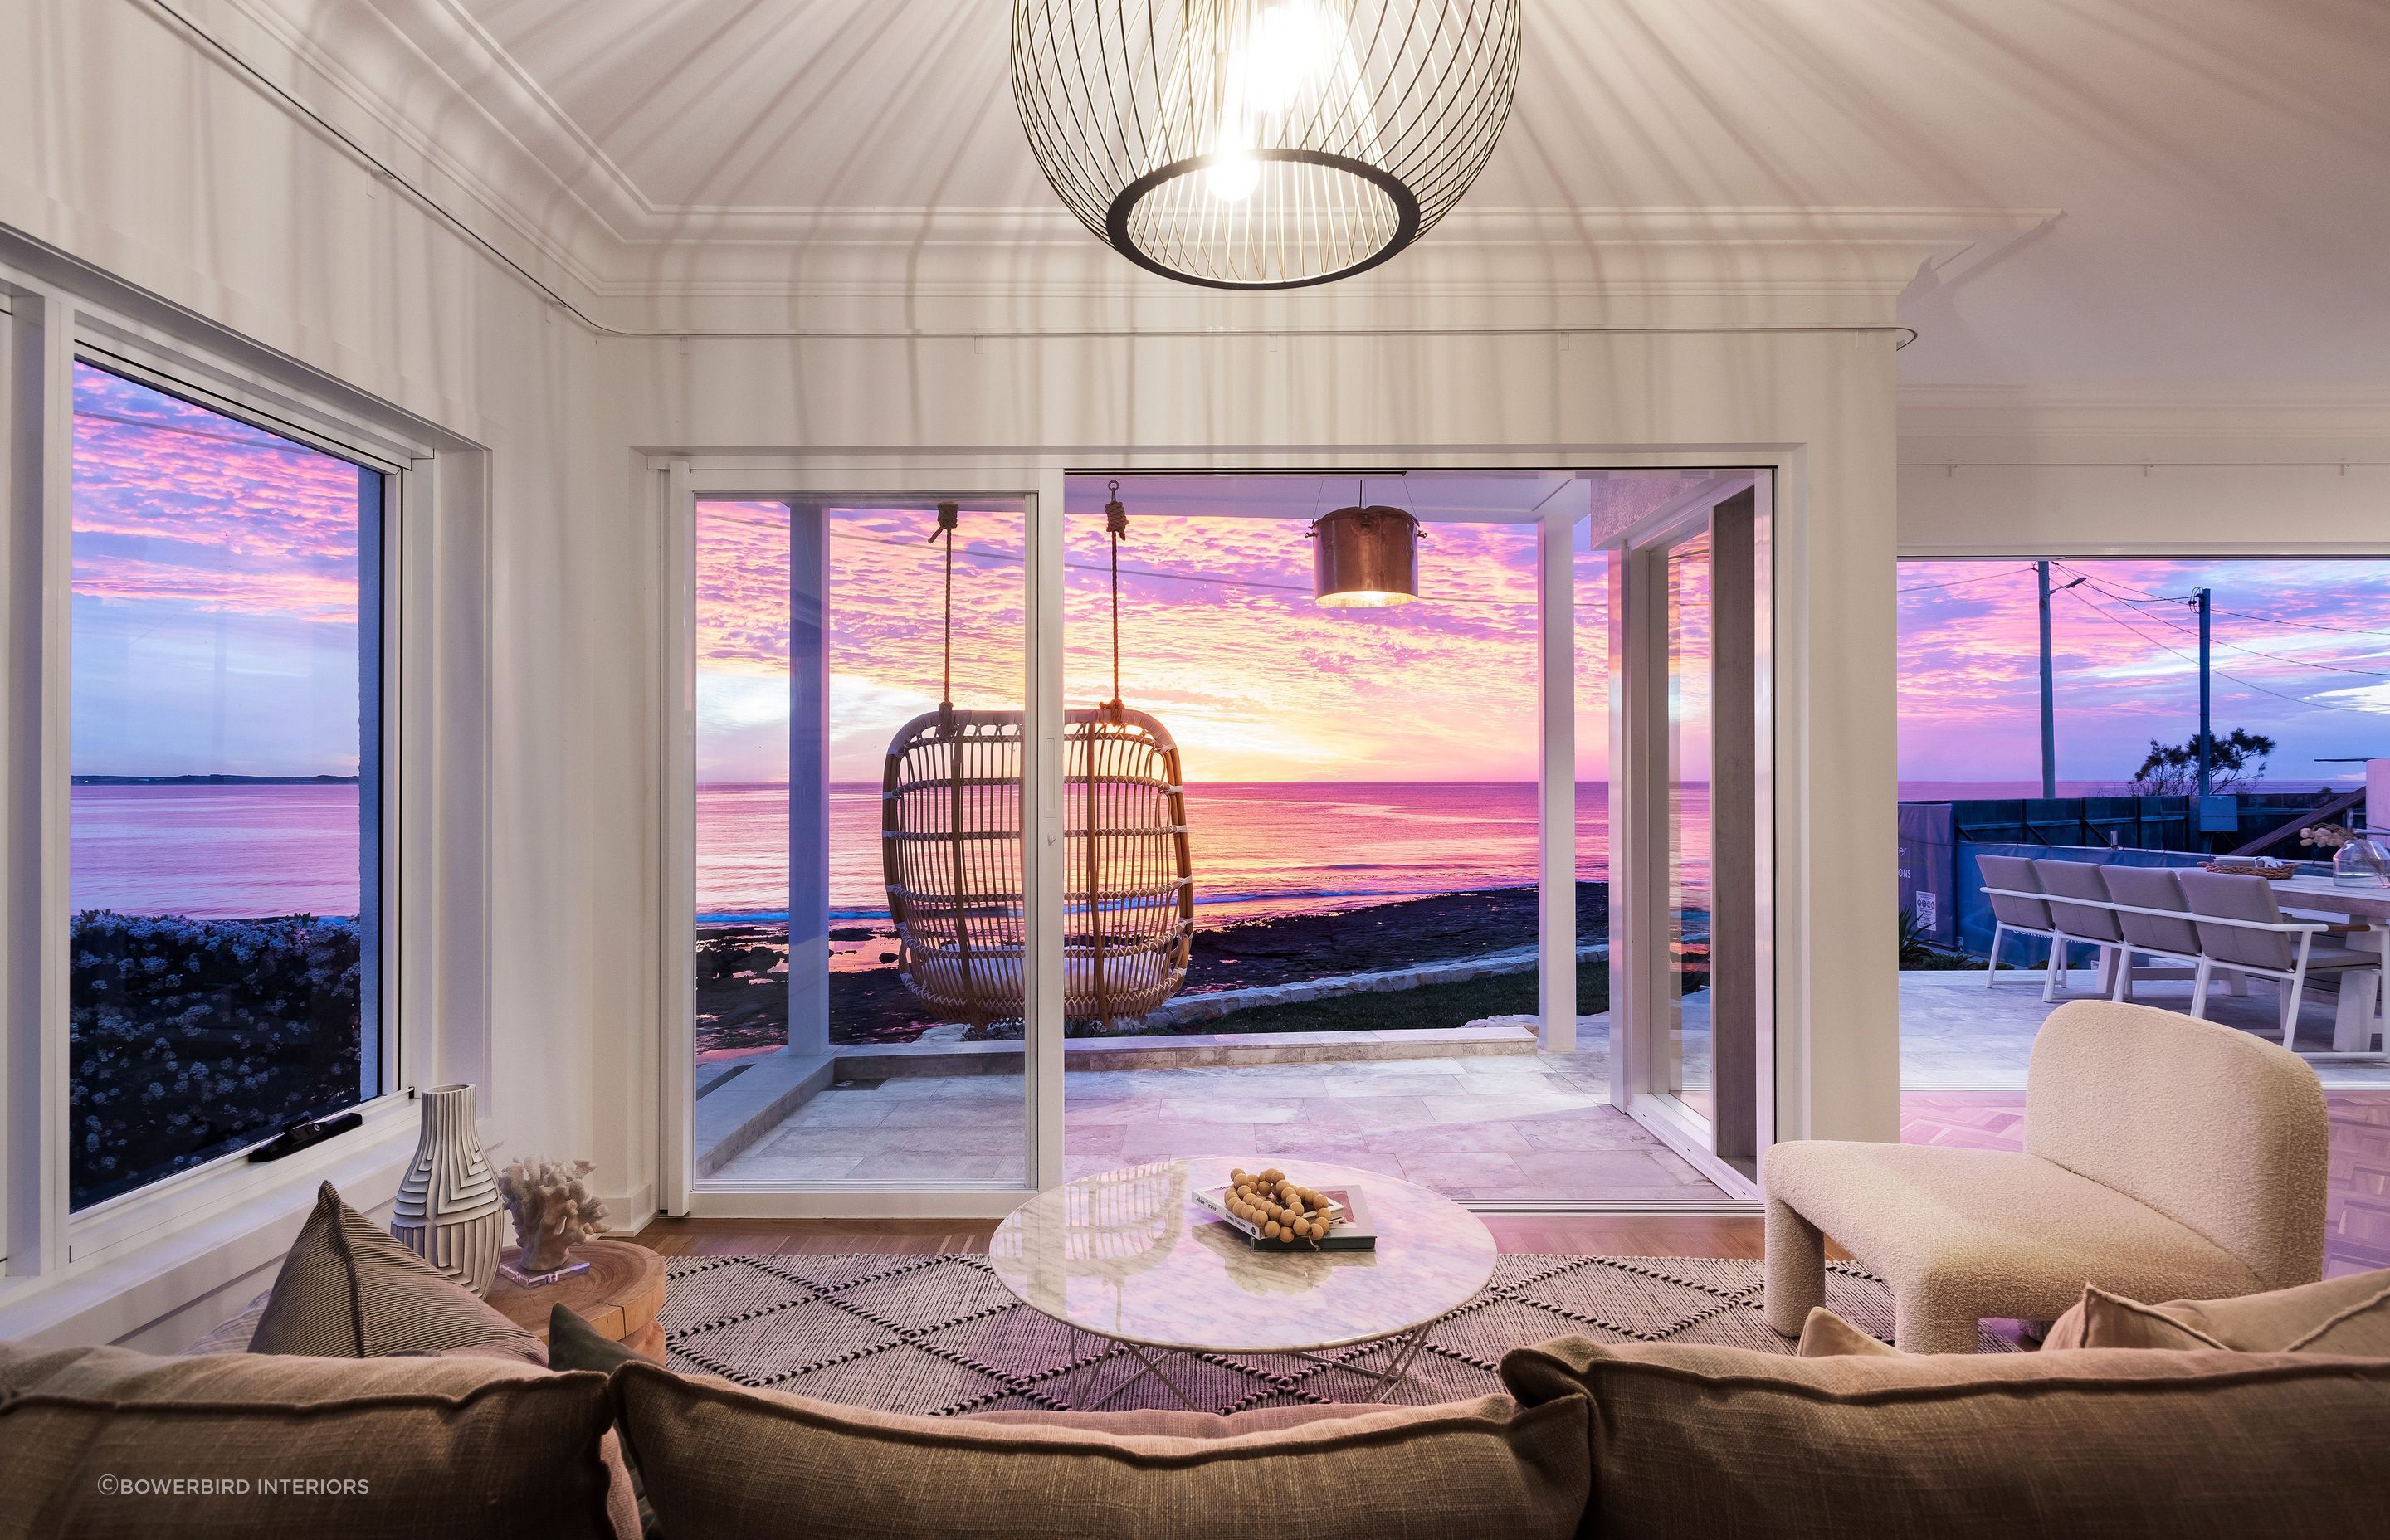 The beautiful interior of this Cronulla home showcases a coastal aesthetic.